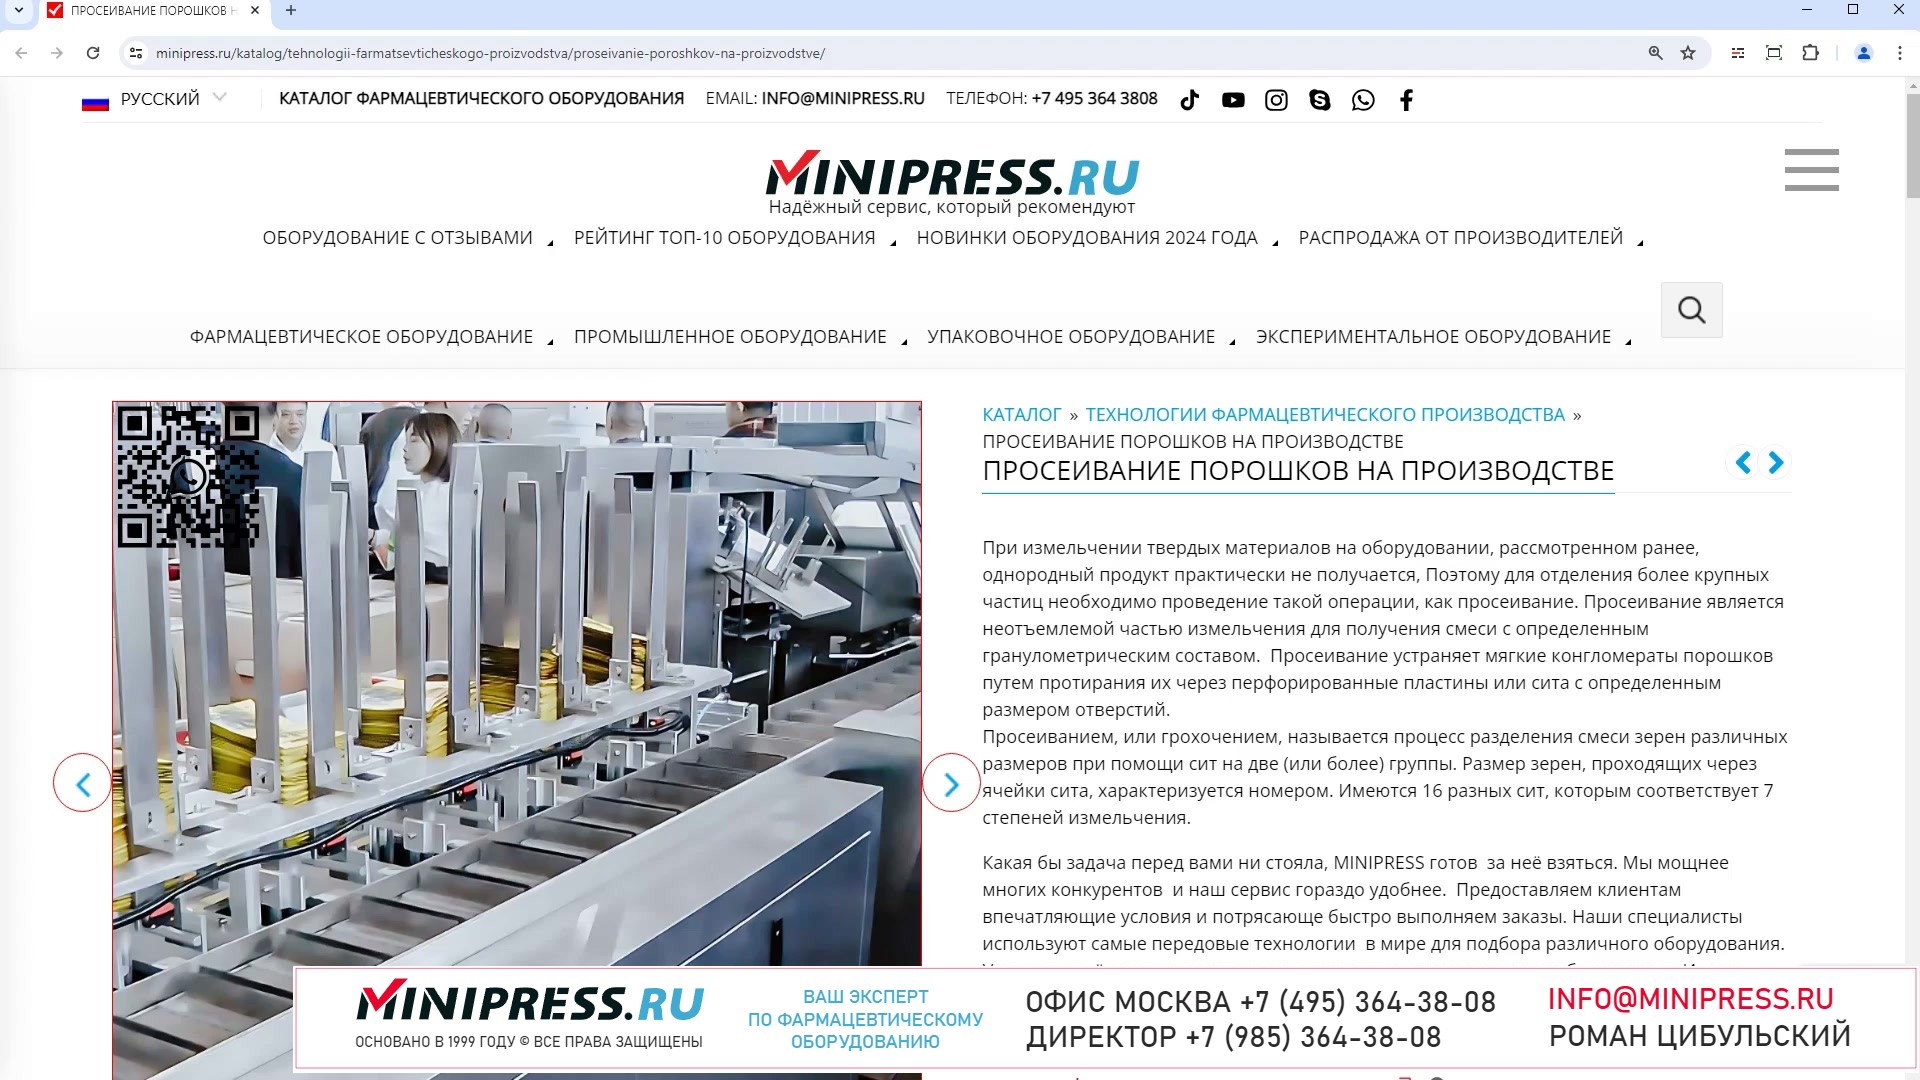 Minipress.ru Просеивание порошков на производстве